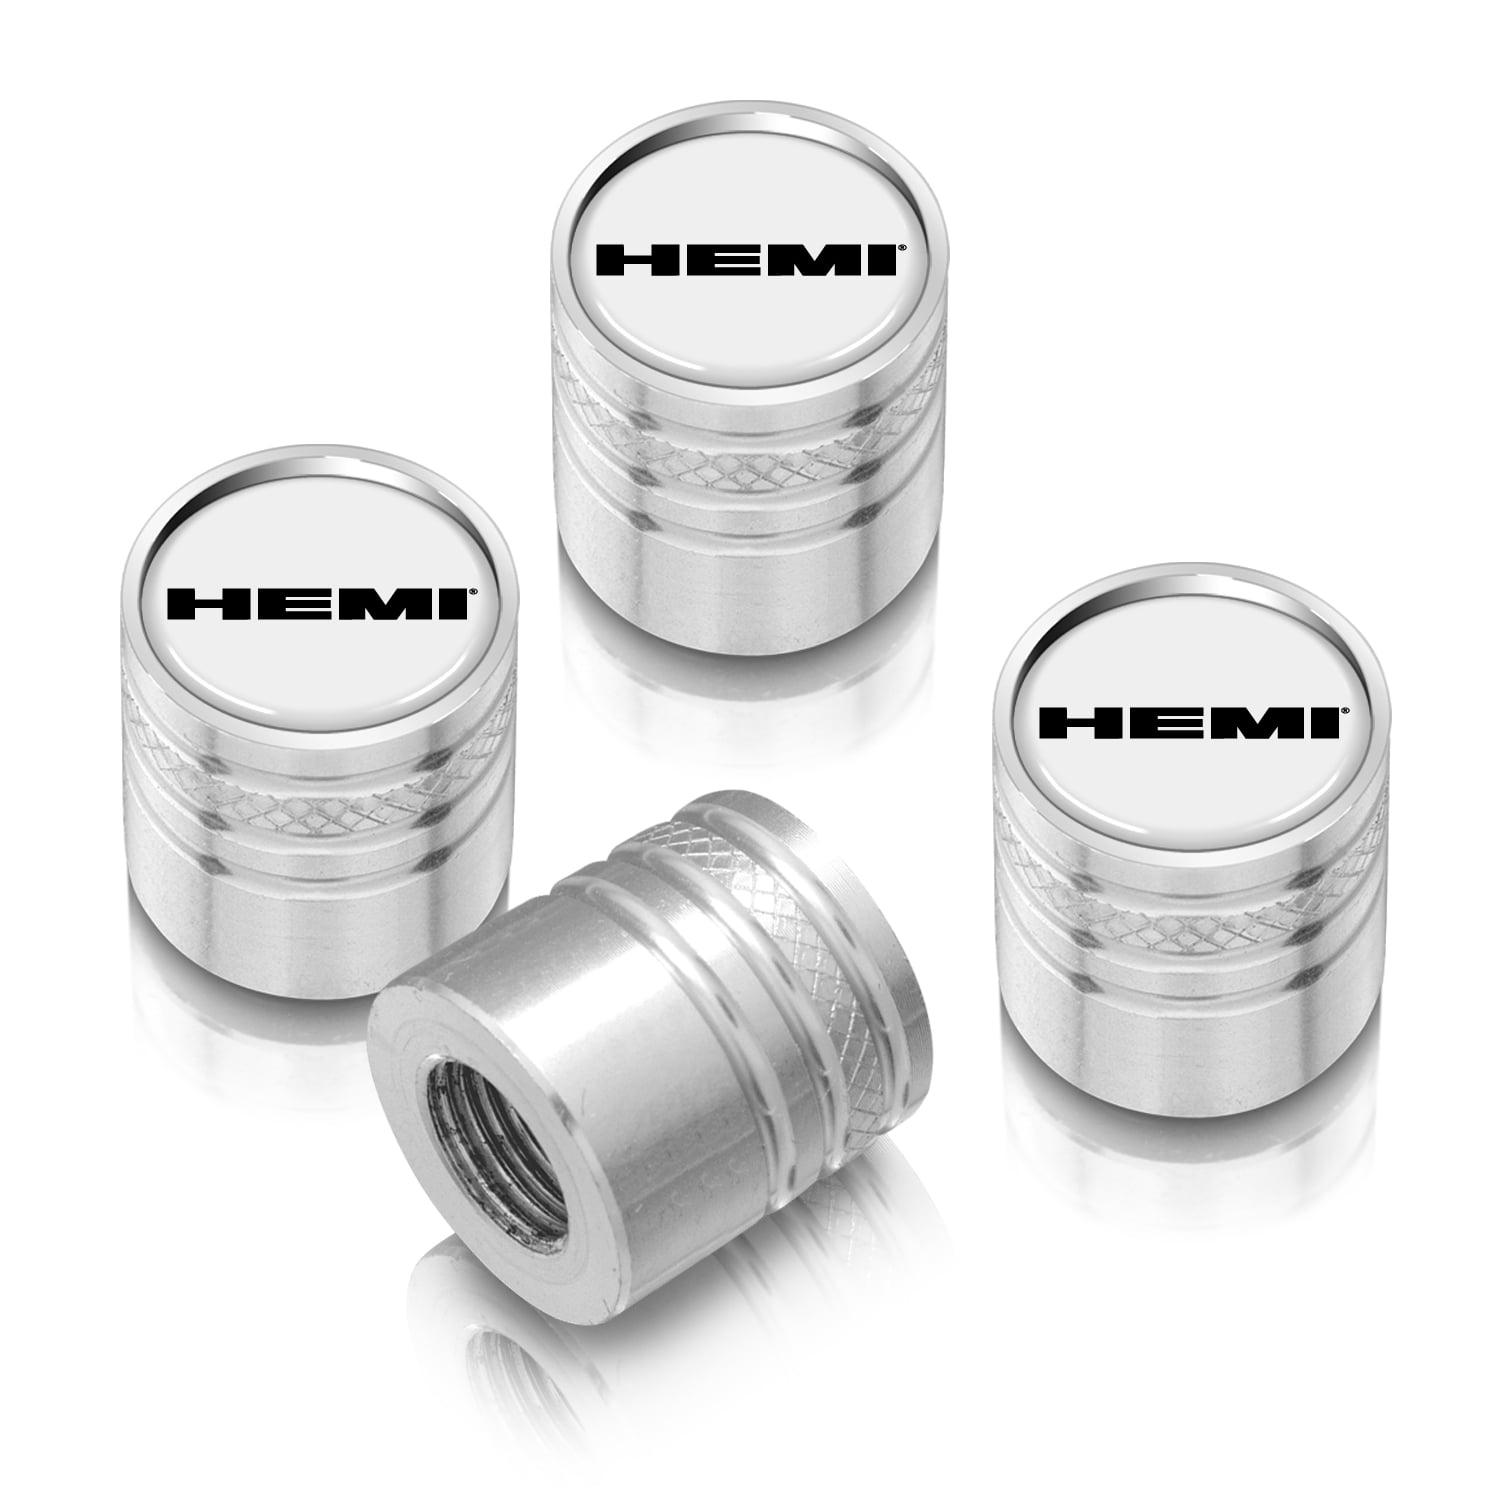 HEMI Logo in Black on Shining Silver Aluminum Tire Valve Stem Caps